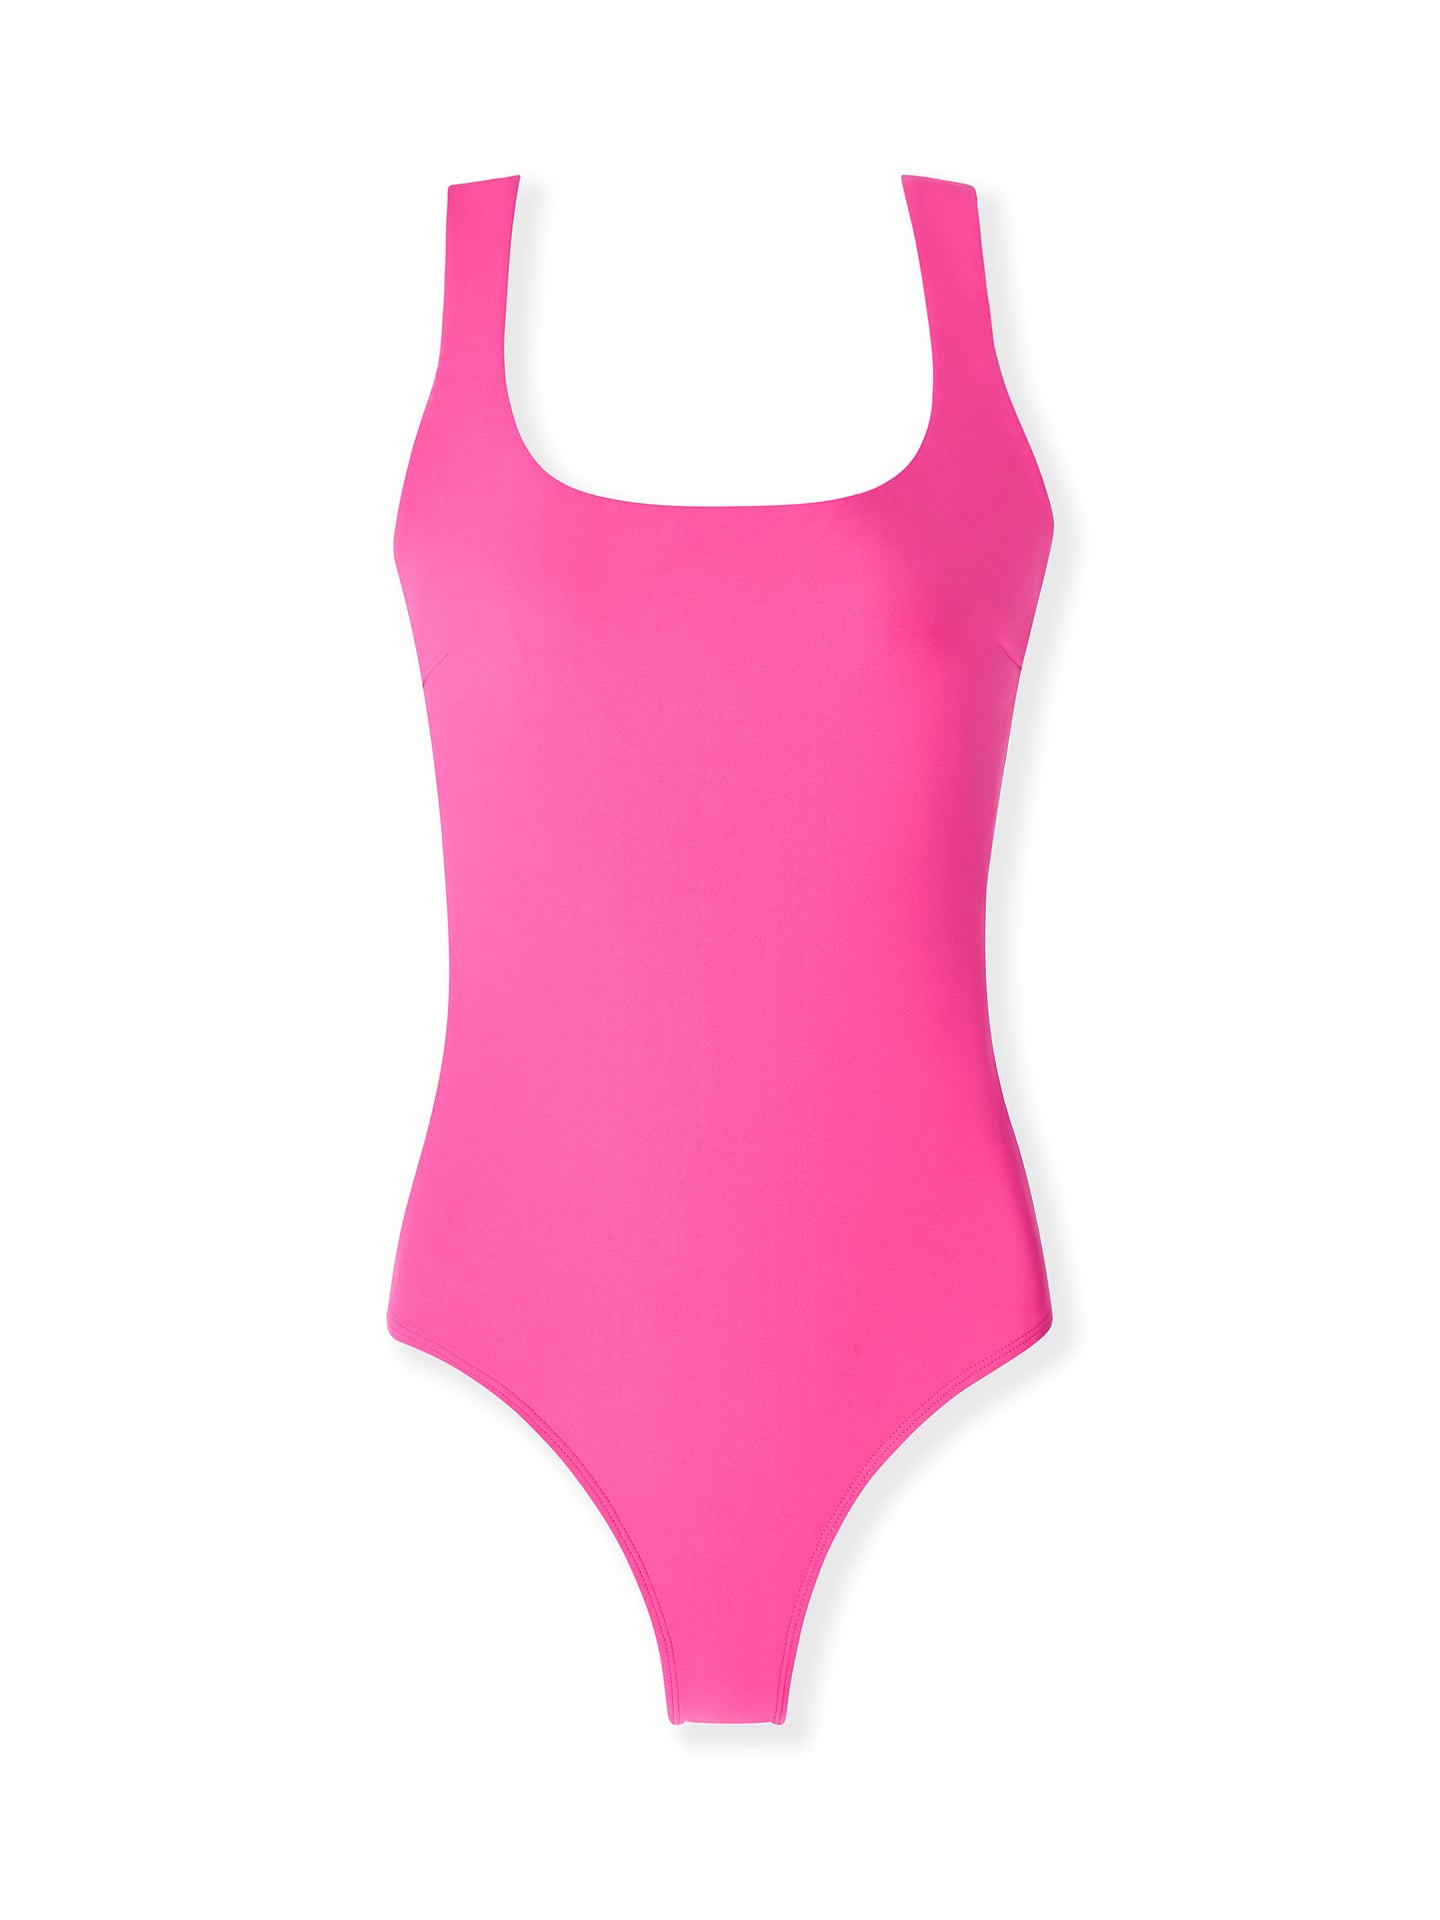 Primark bodysuit, Pink, Size large, best fit size